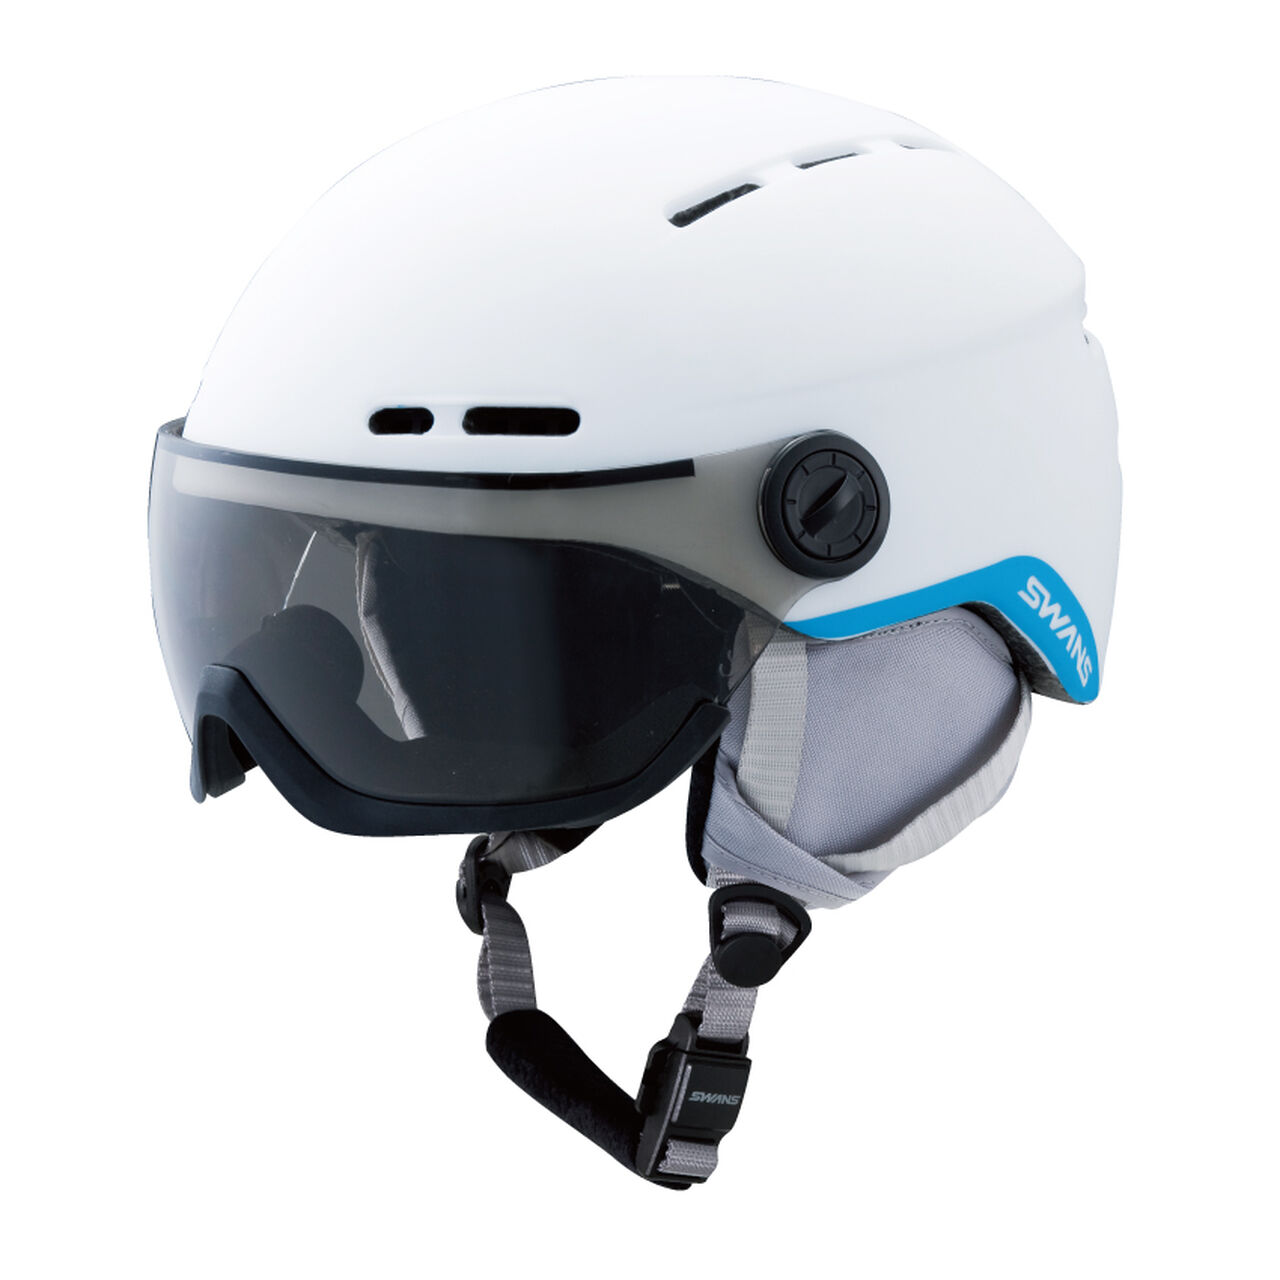 H-81 visor helmet Matte white,Opt2, large image number 0